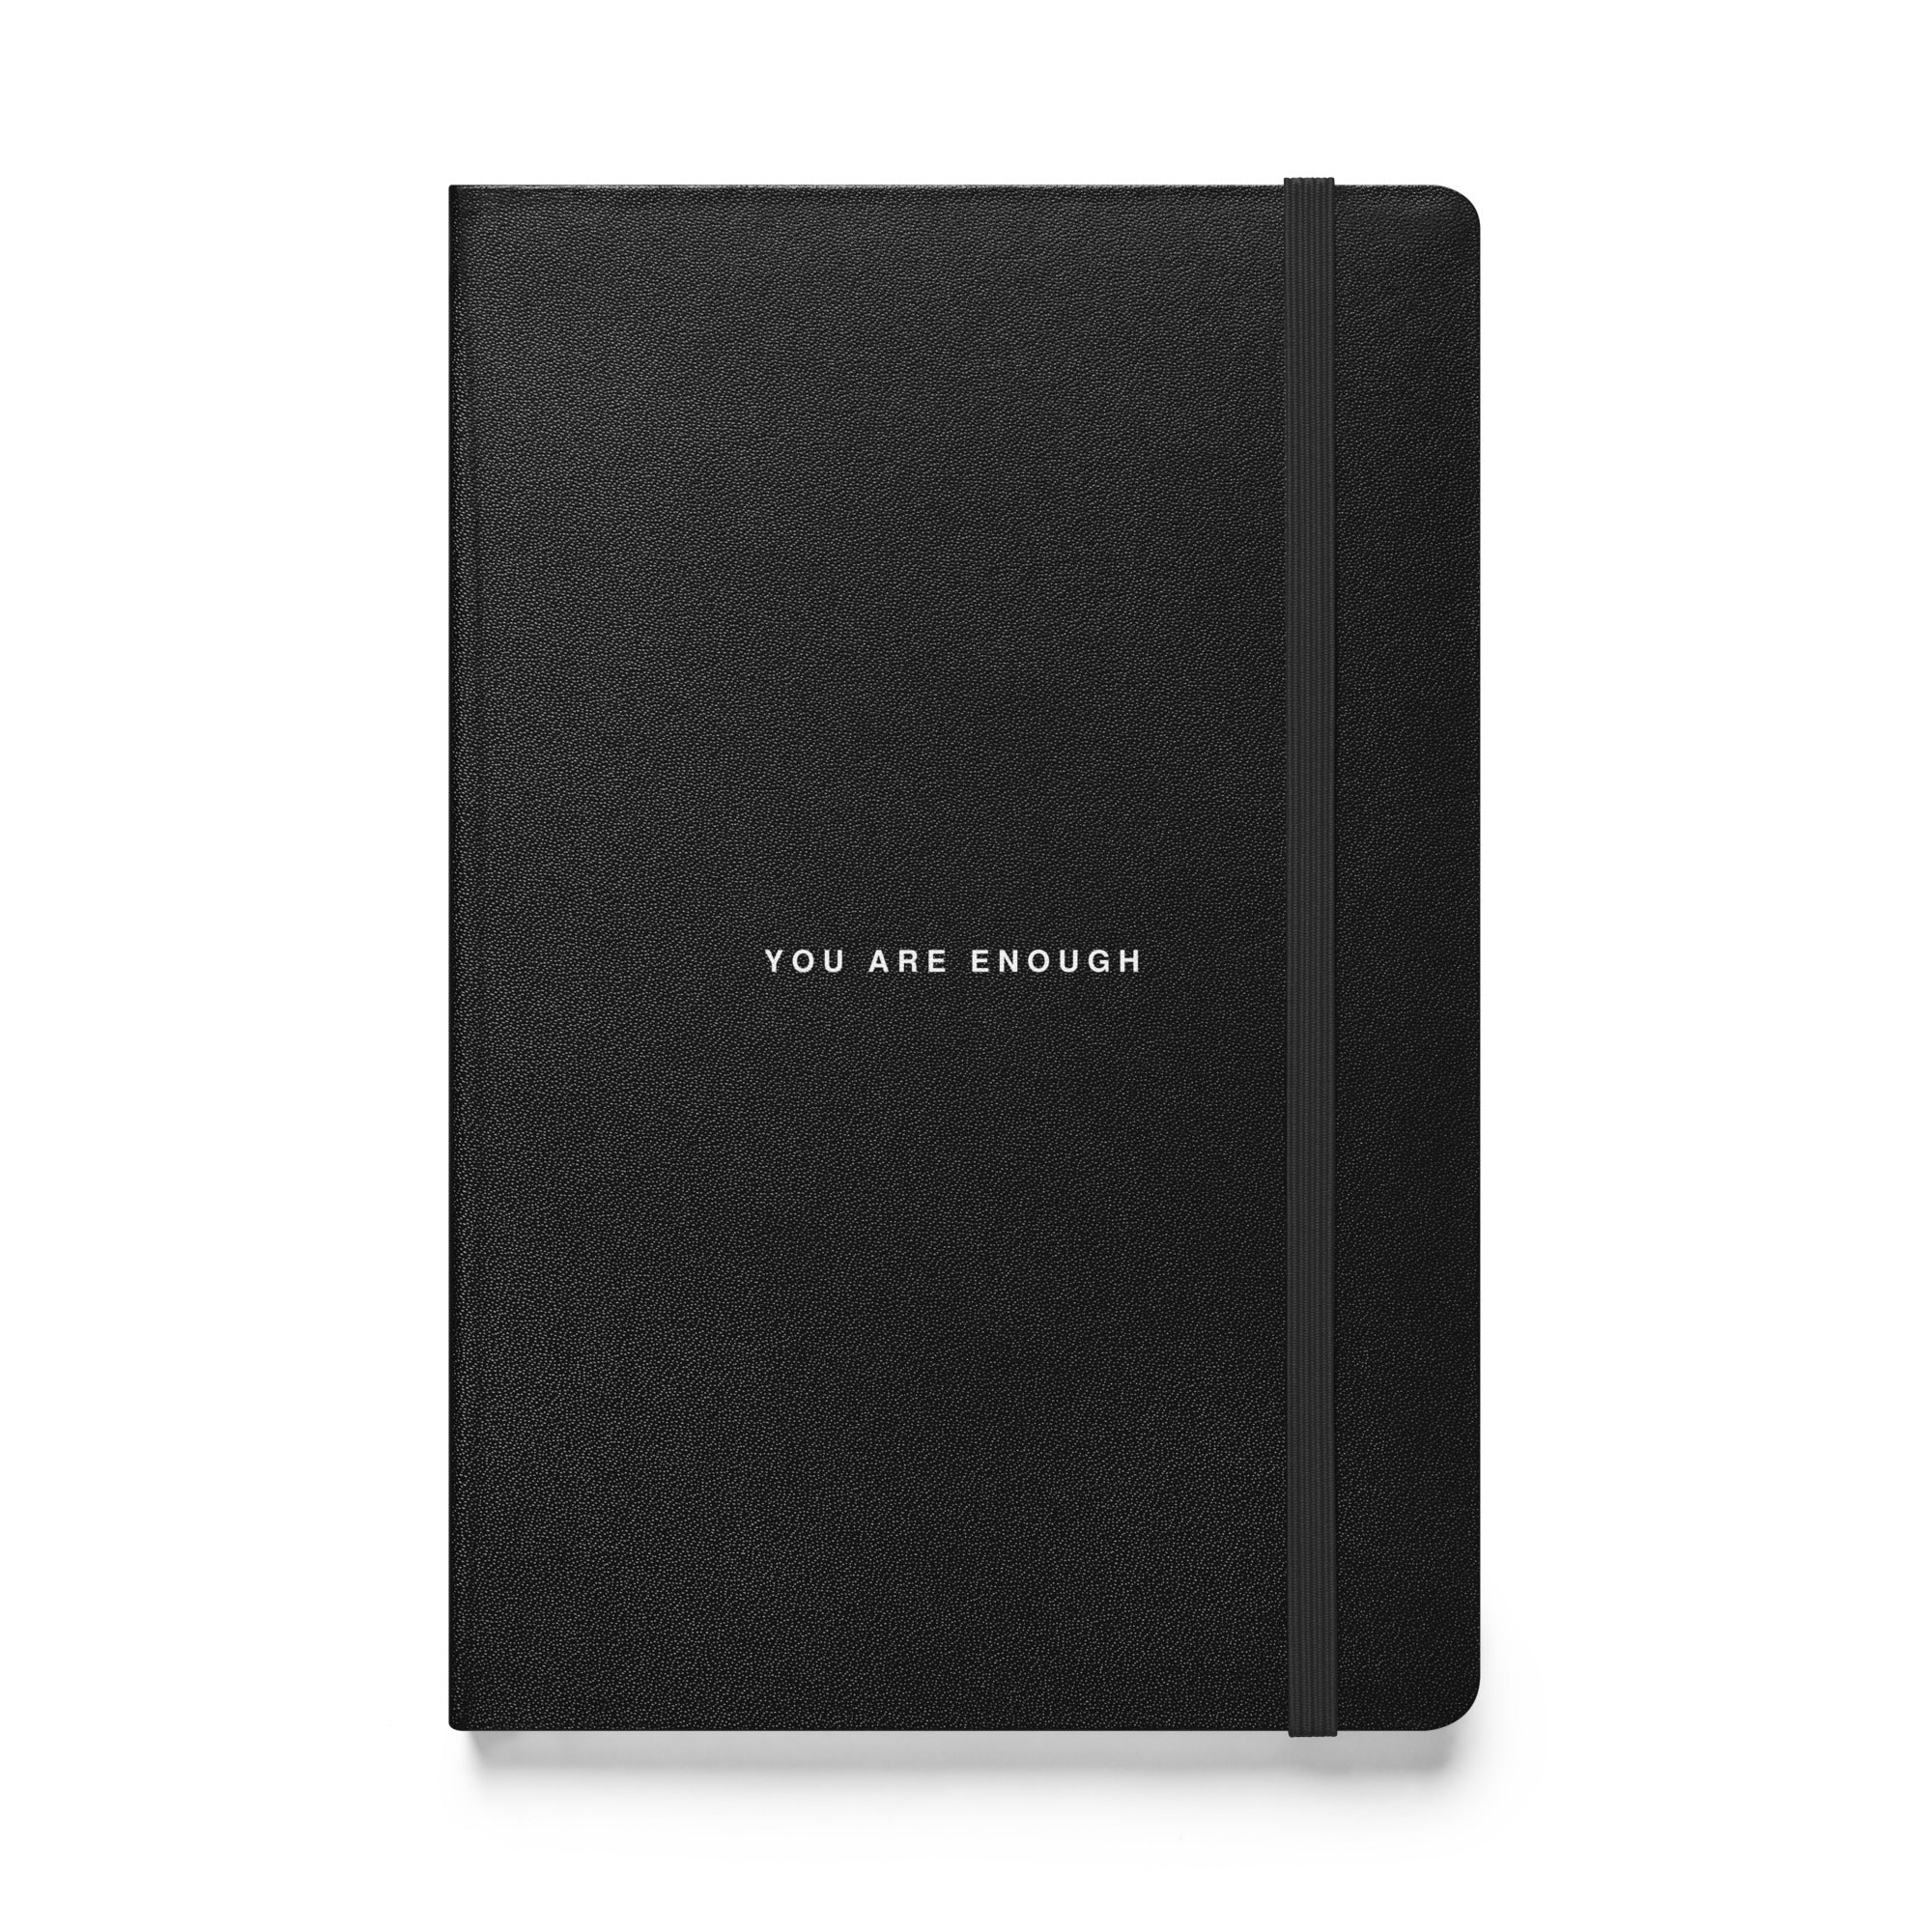 hardcover-bound-notebook-black-front-6608681262cc0.jpg